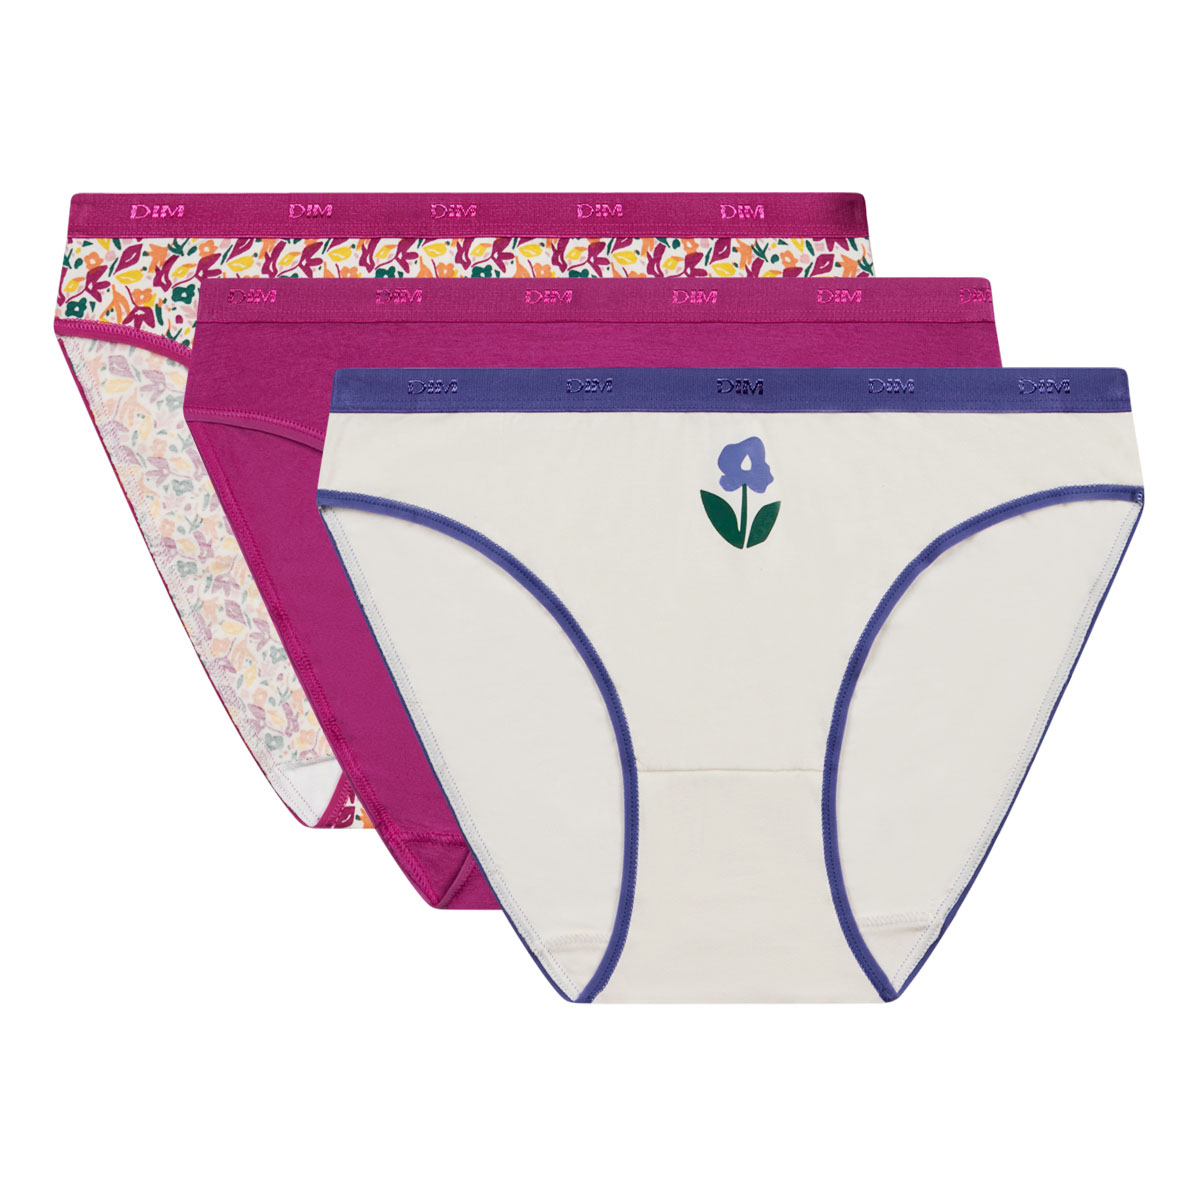 150 Pairs Women's Brown Cotton Panty, Size 8 - Womens Panties